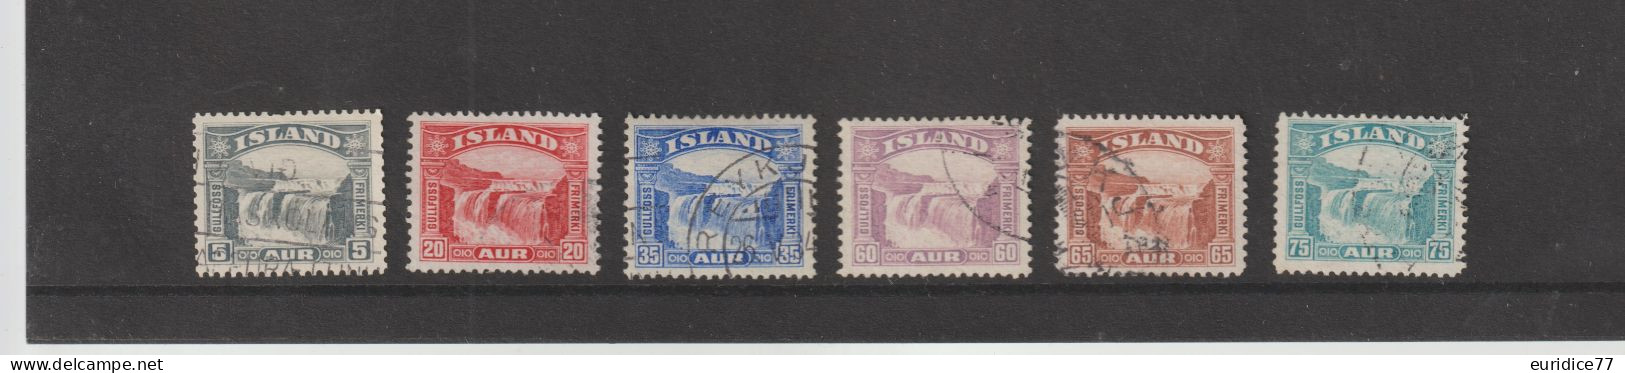 Islande 1931-32 - Yvert 139/44 Oblitere Cote 45€ - Used Stamps